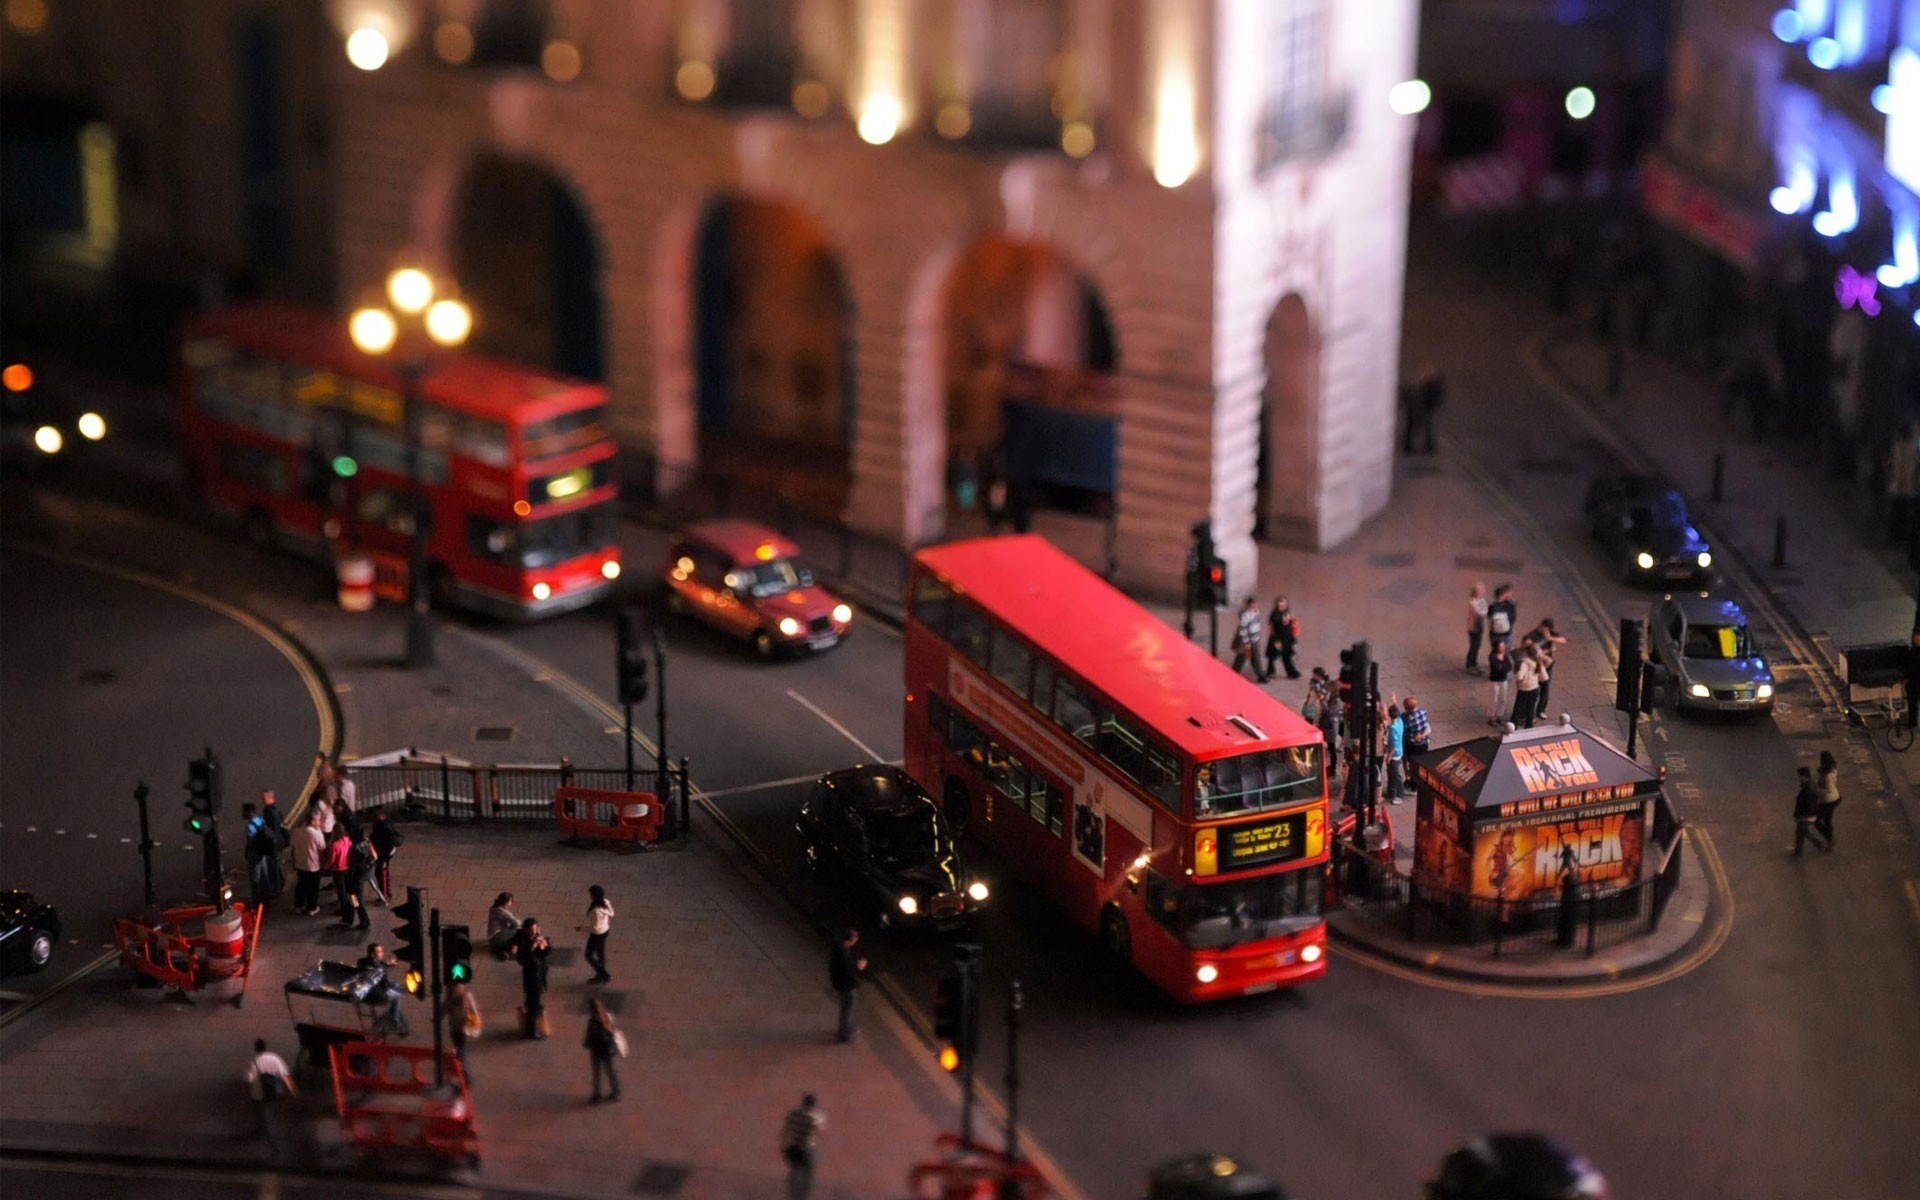 UK London Town Bus Tilt Shift Photo HD Wallpaper - FreeWallsUp